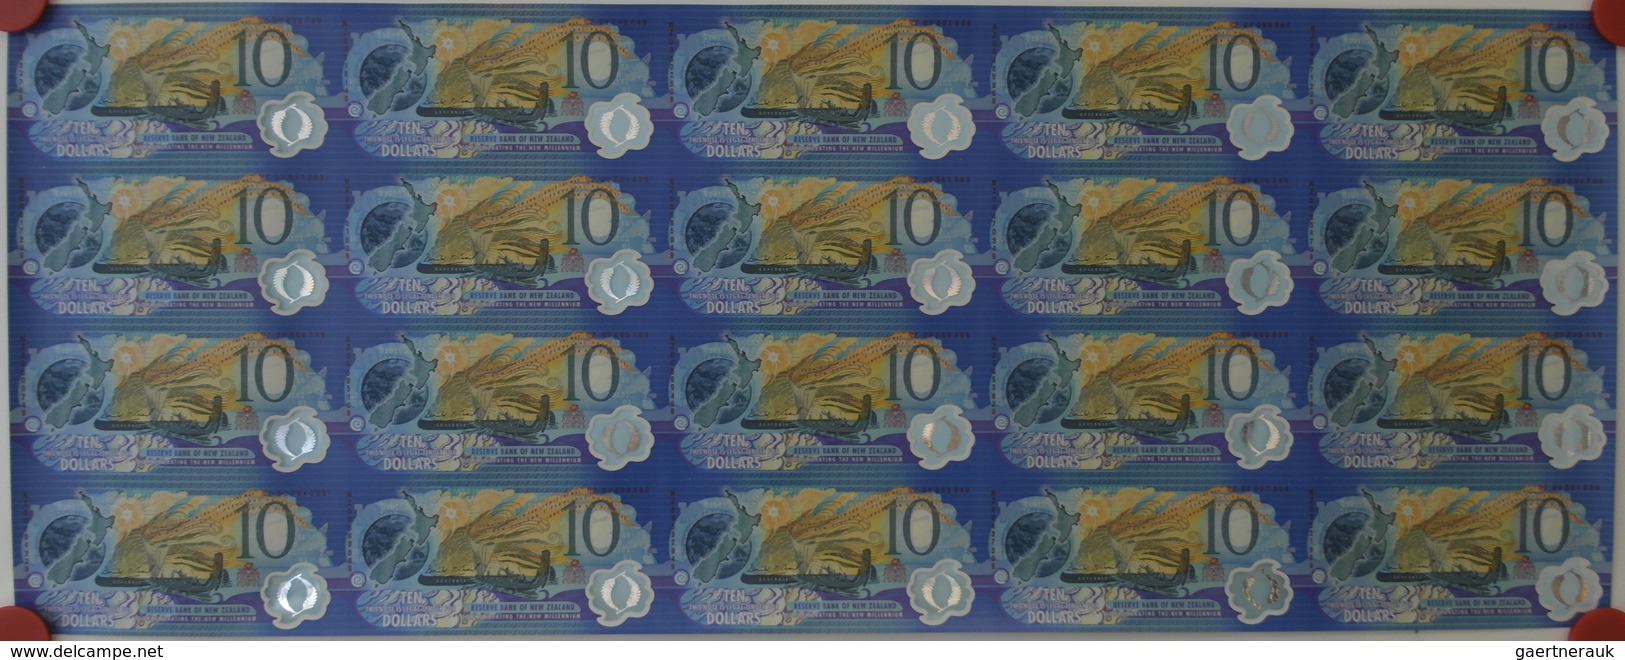 New Zealand / Neuseeland: Uncut Sheet Of 20 Pcs 10 Dollars 2000 P. 190 N Condition: UNC. (20 Pcs Unc - New Zealand